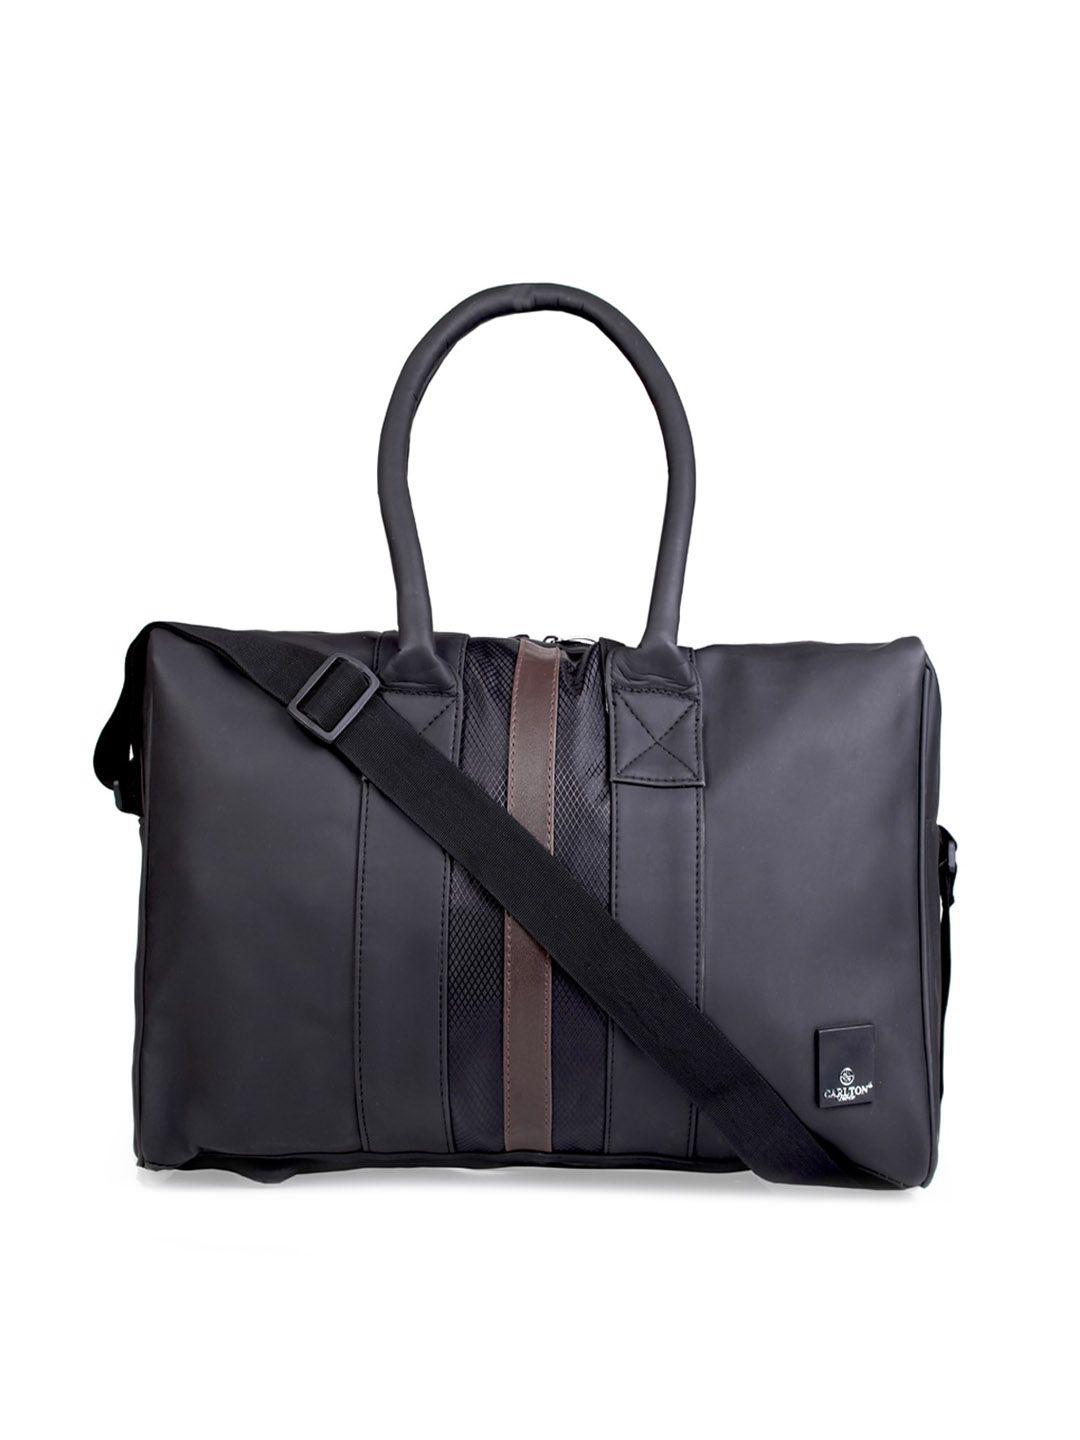 carlton london textured leather duffel bag